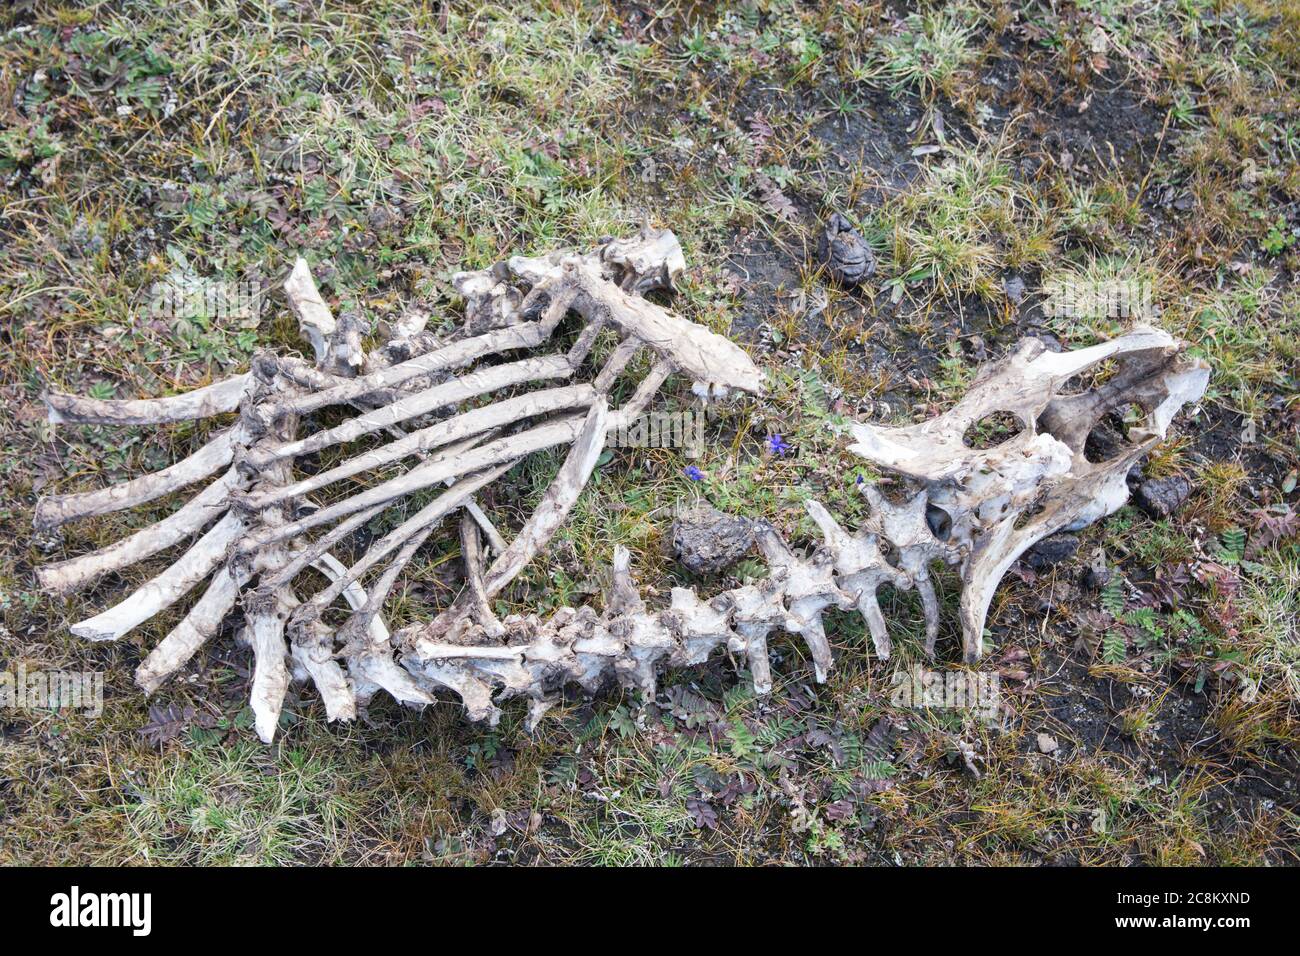 Animal bones on the ground Stock Photo - Alamy